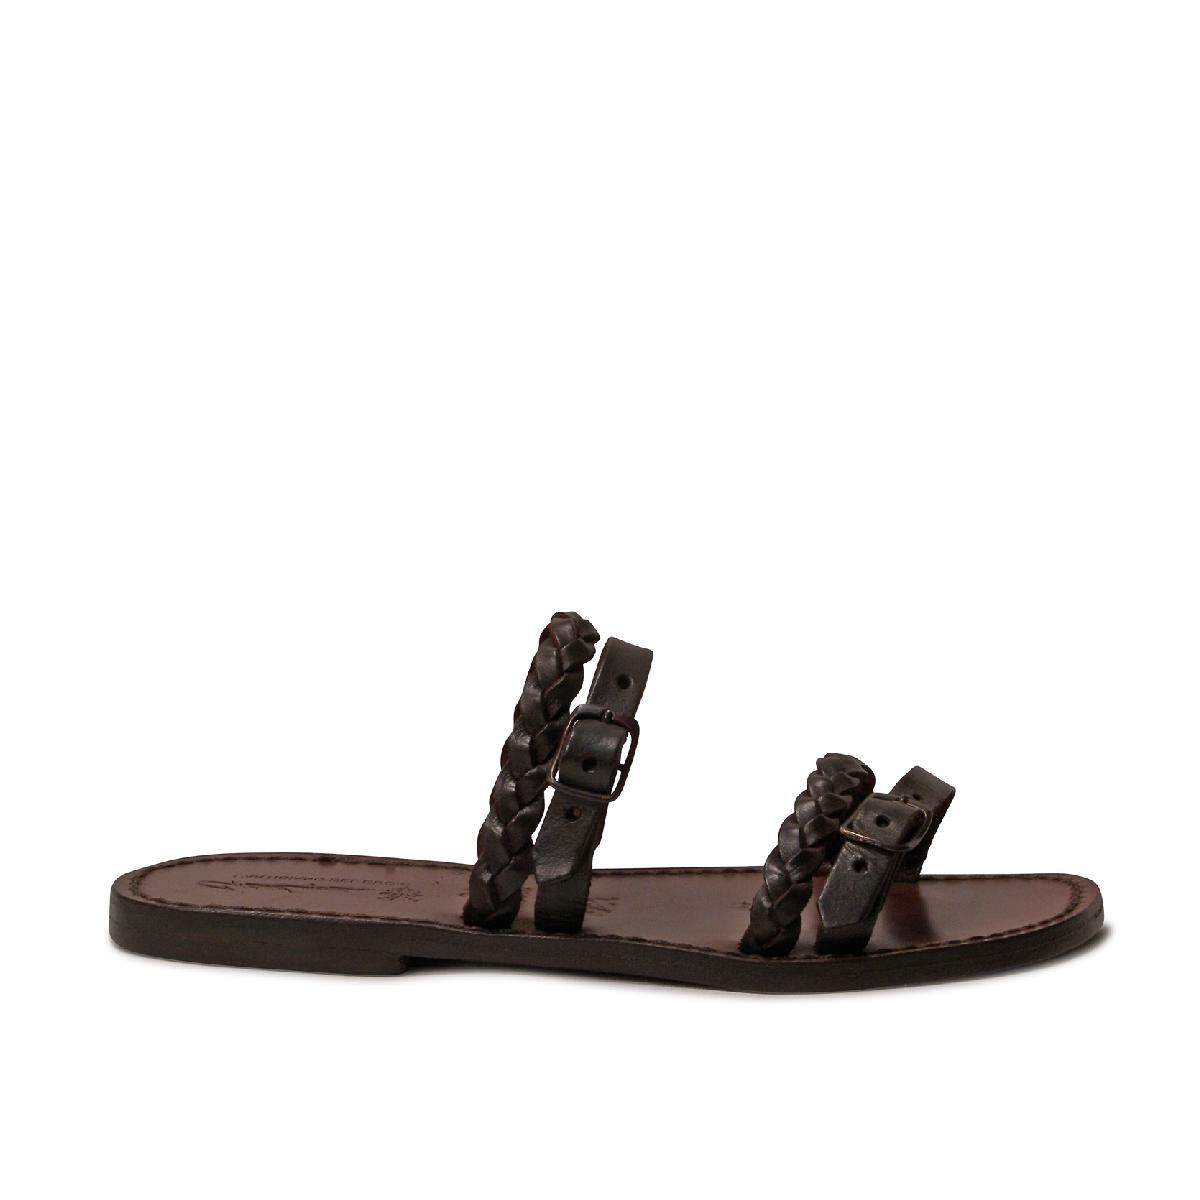 Handmade women s slipper sandals  dark brown leather 